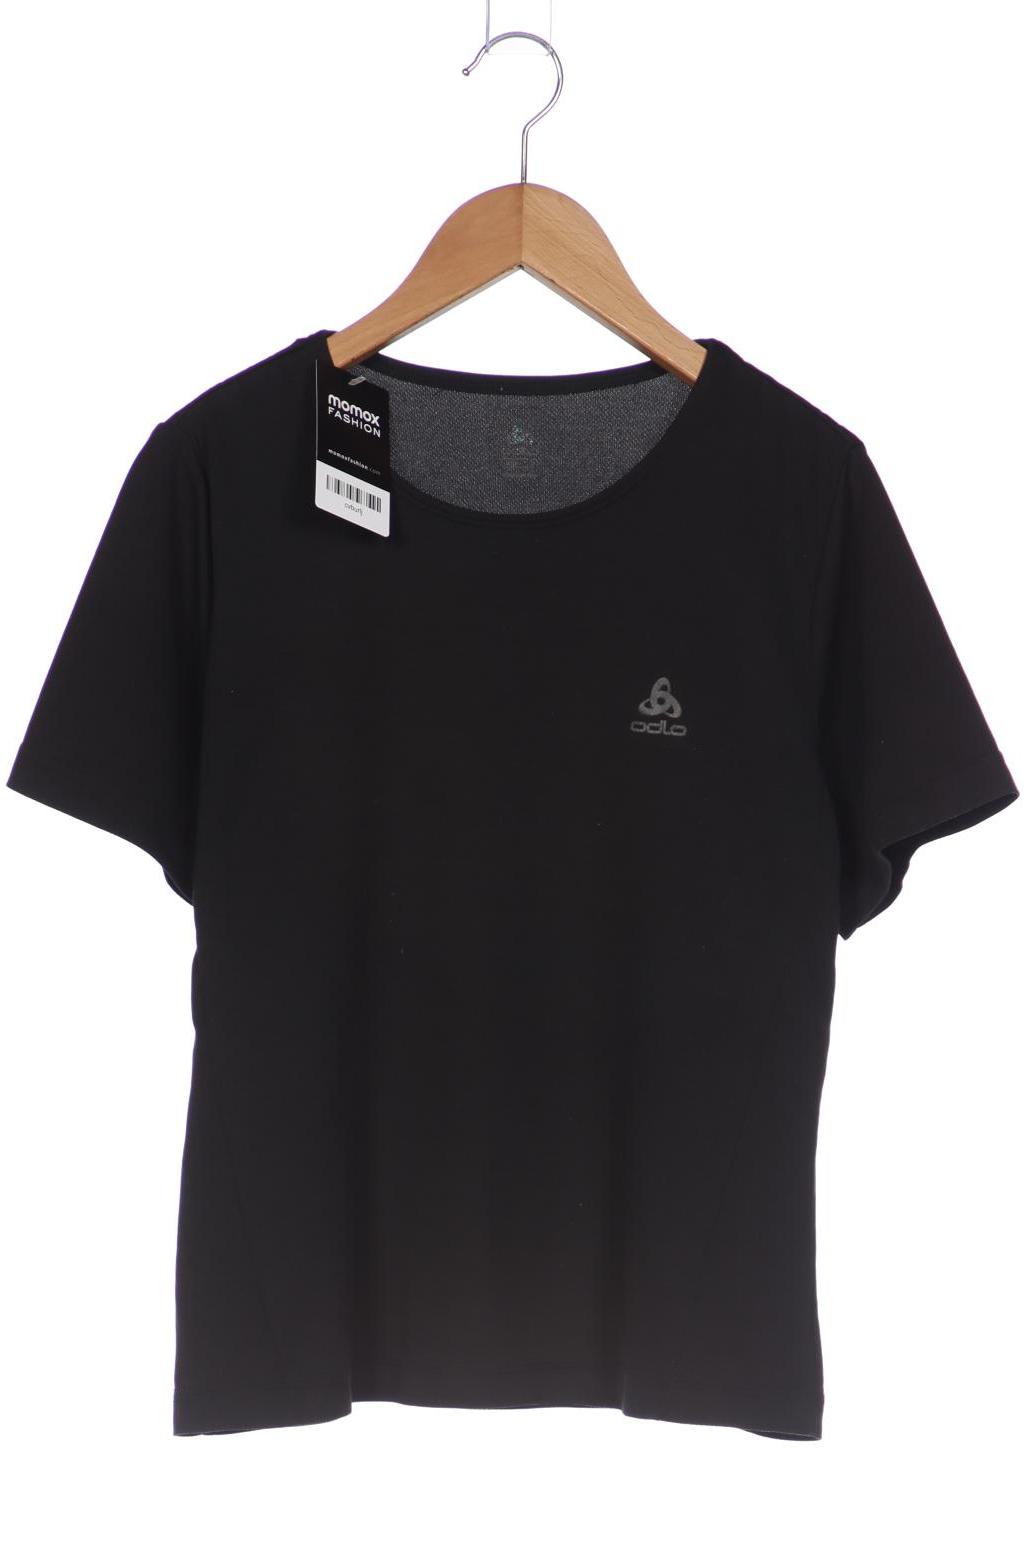 Odlo Damen T-Shirt, schwarz von Odlo